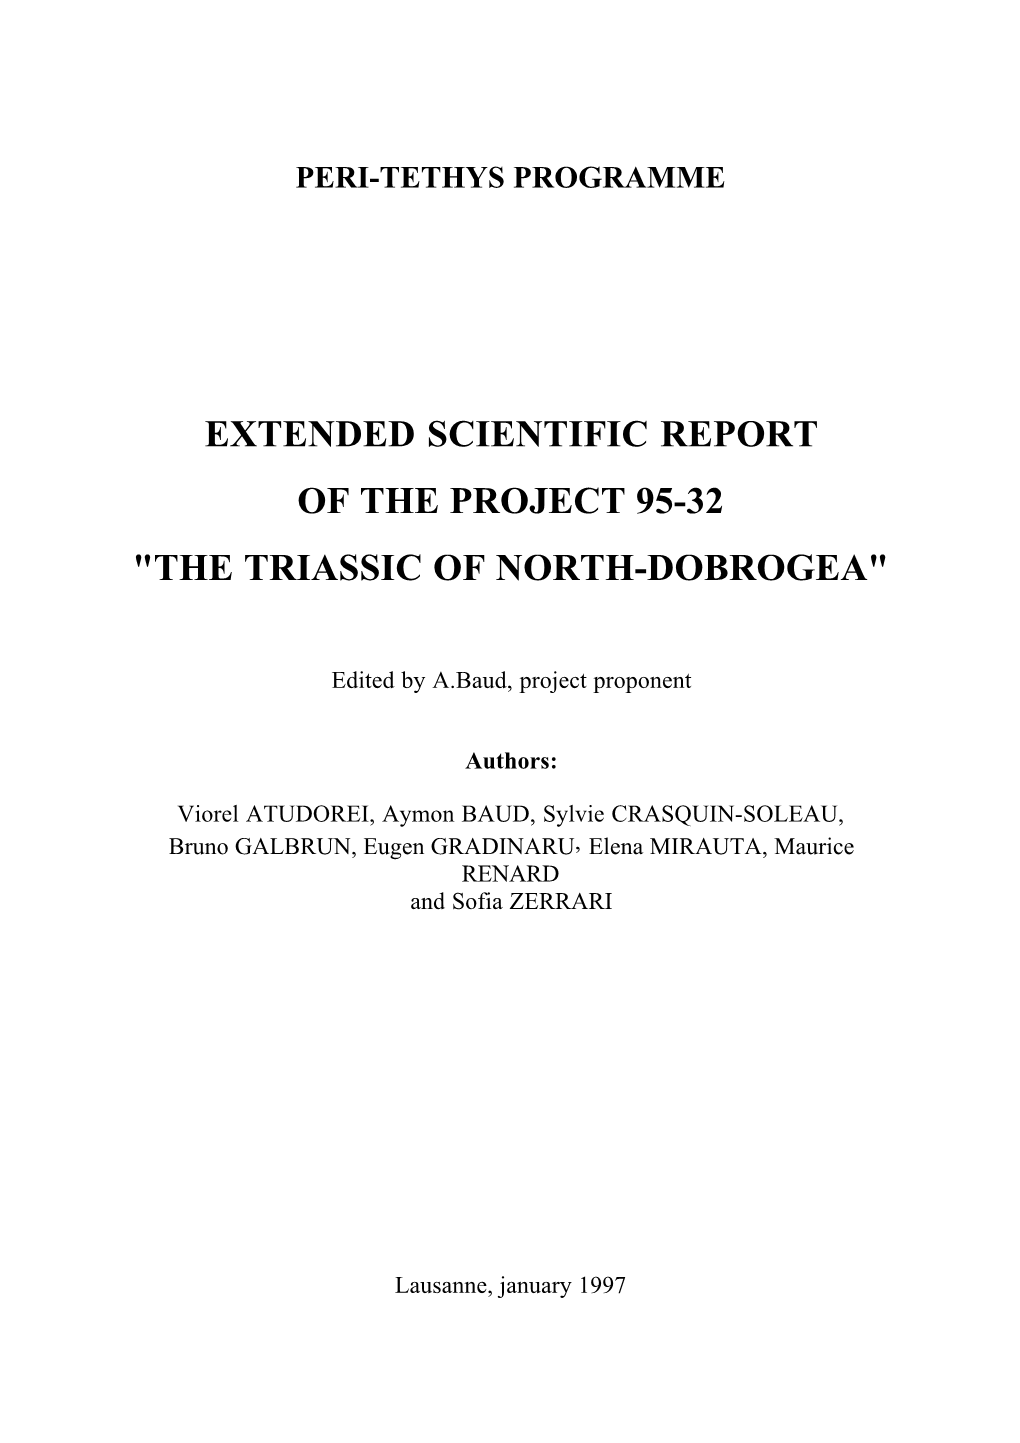 The Triassic of North-Dobrogea"